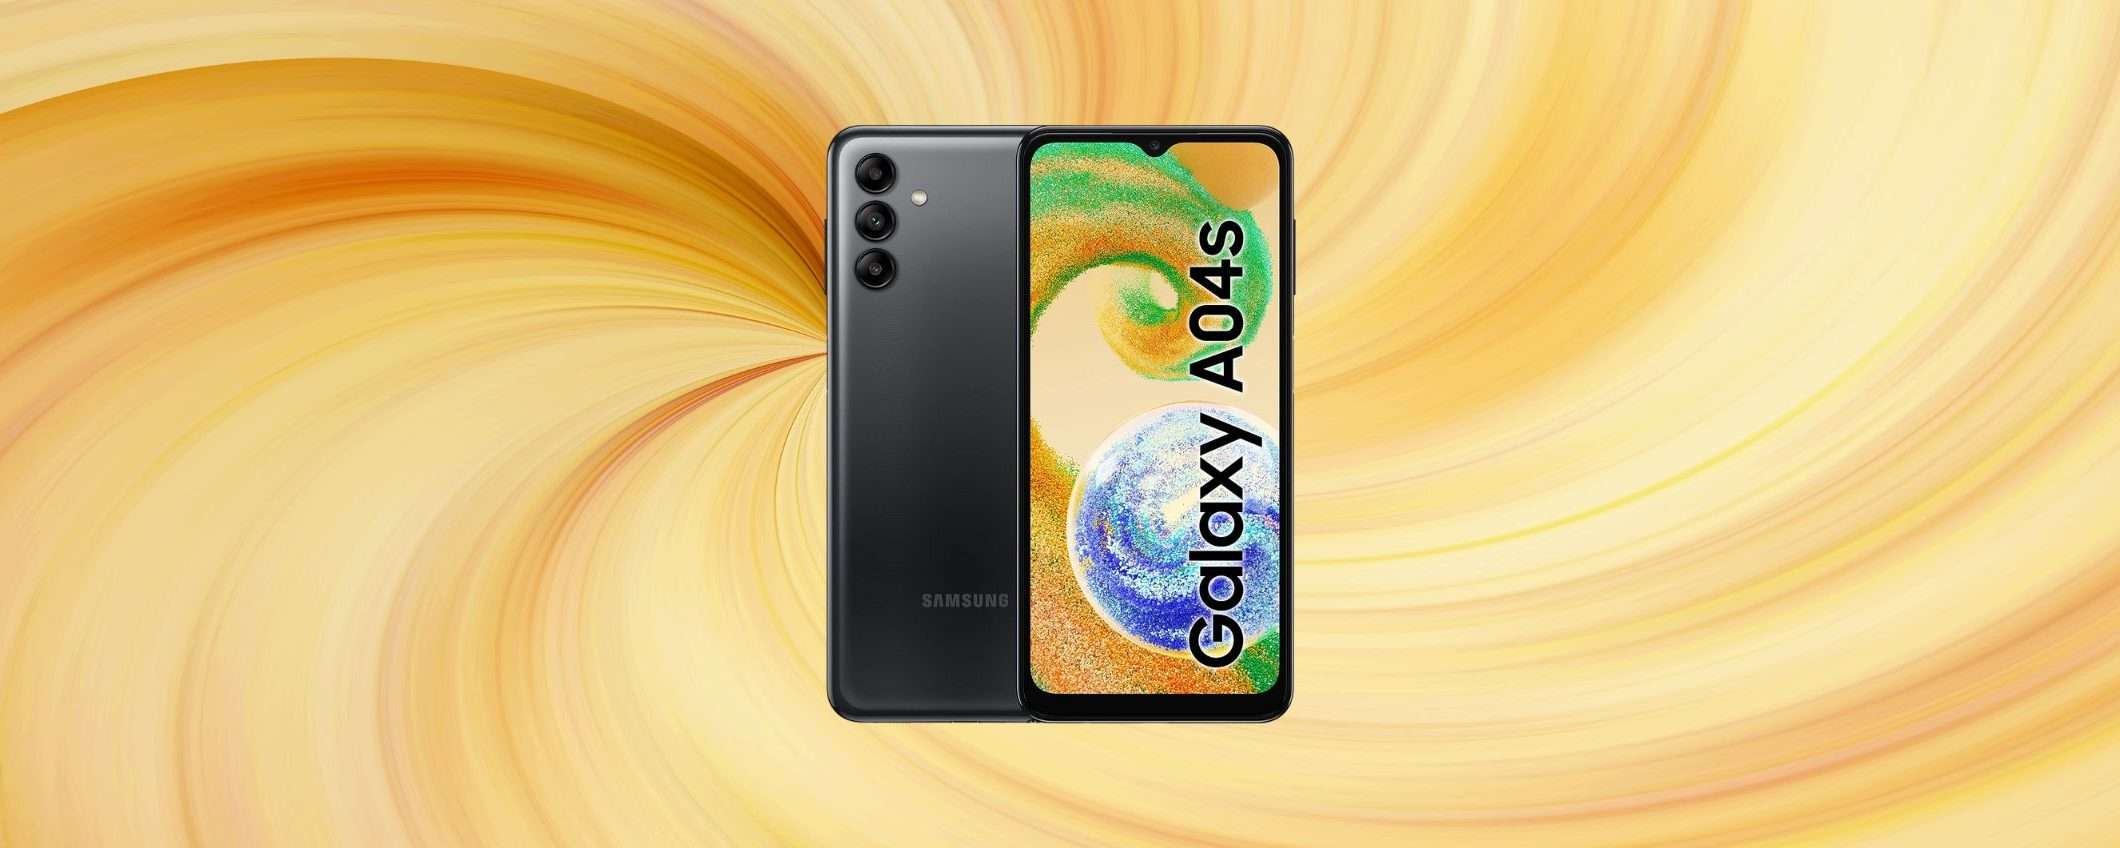 Smartphone Samsung Galaxy a 108€: INCREDIBILE SCONTO Amazon (-39%)